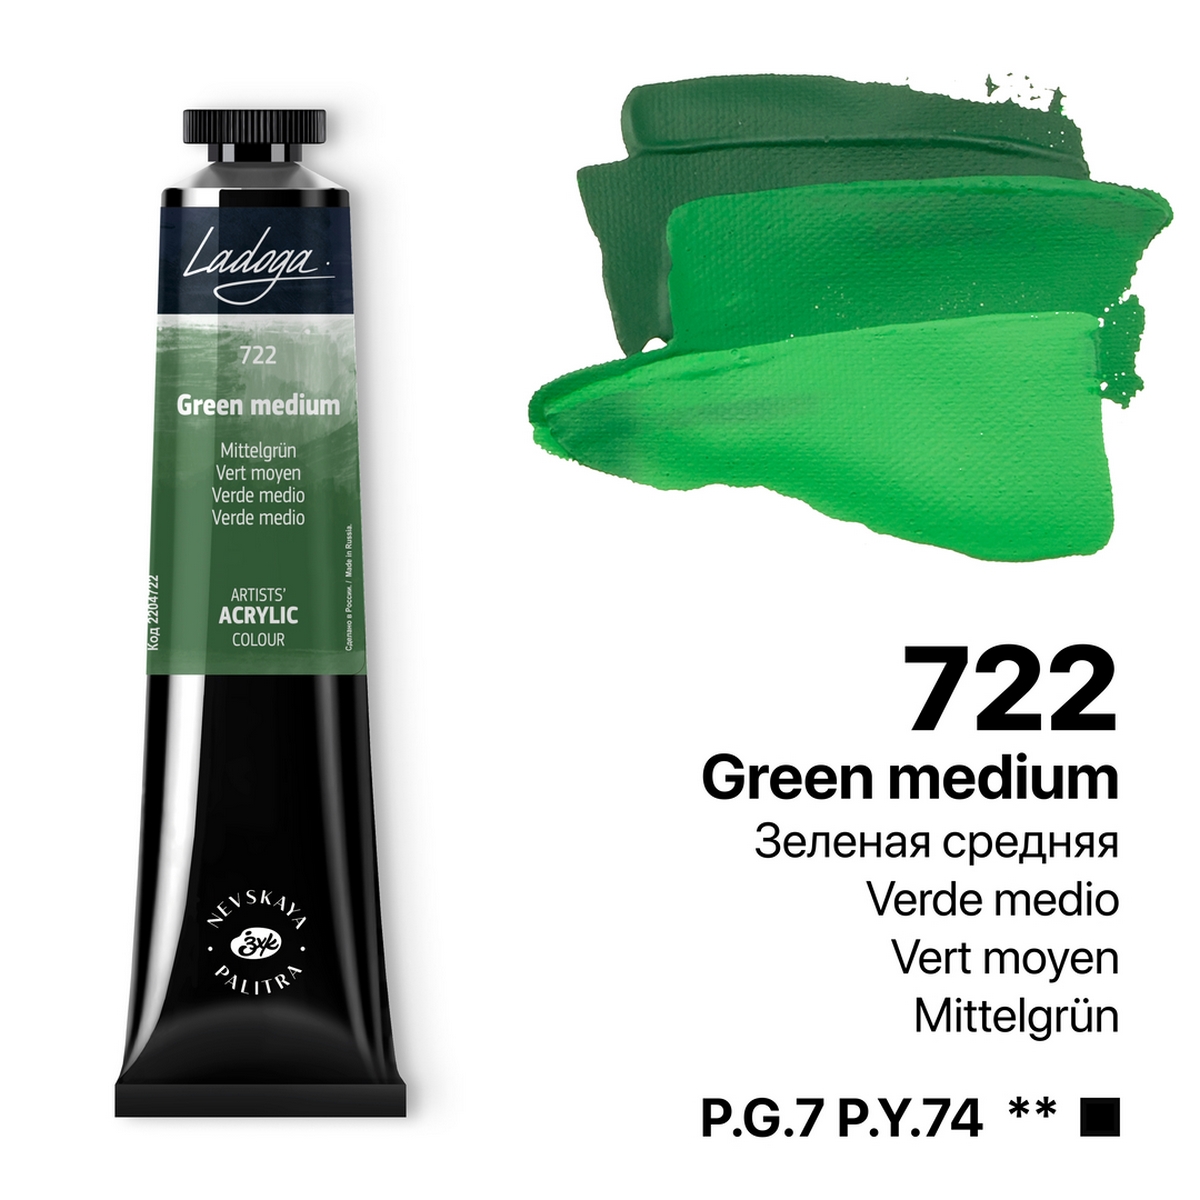 Acrylic colour Ladoga, Green Medium, №722